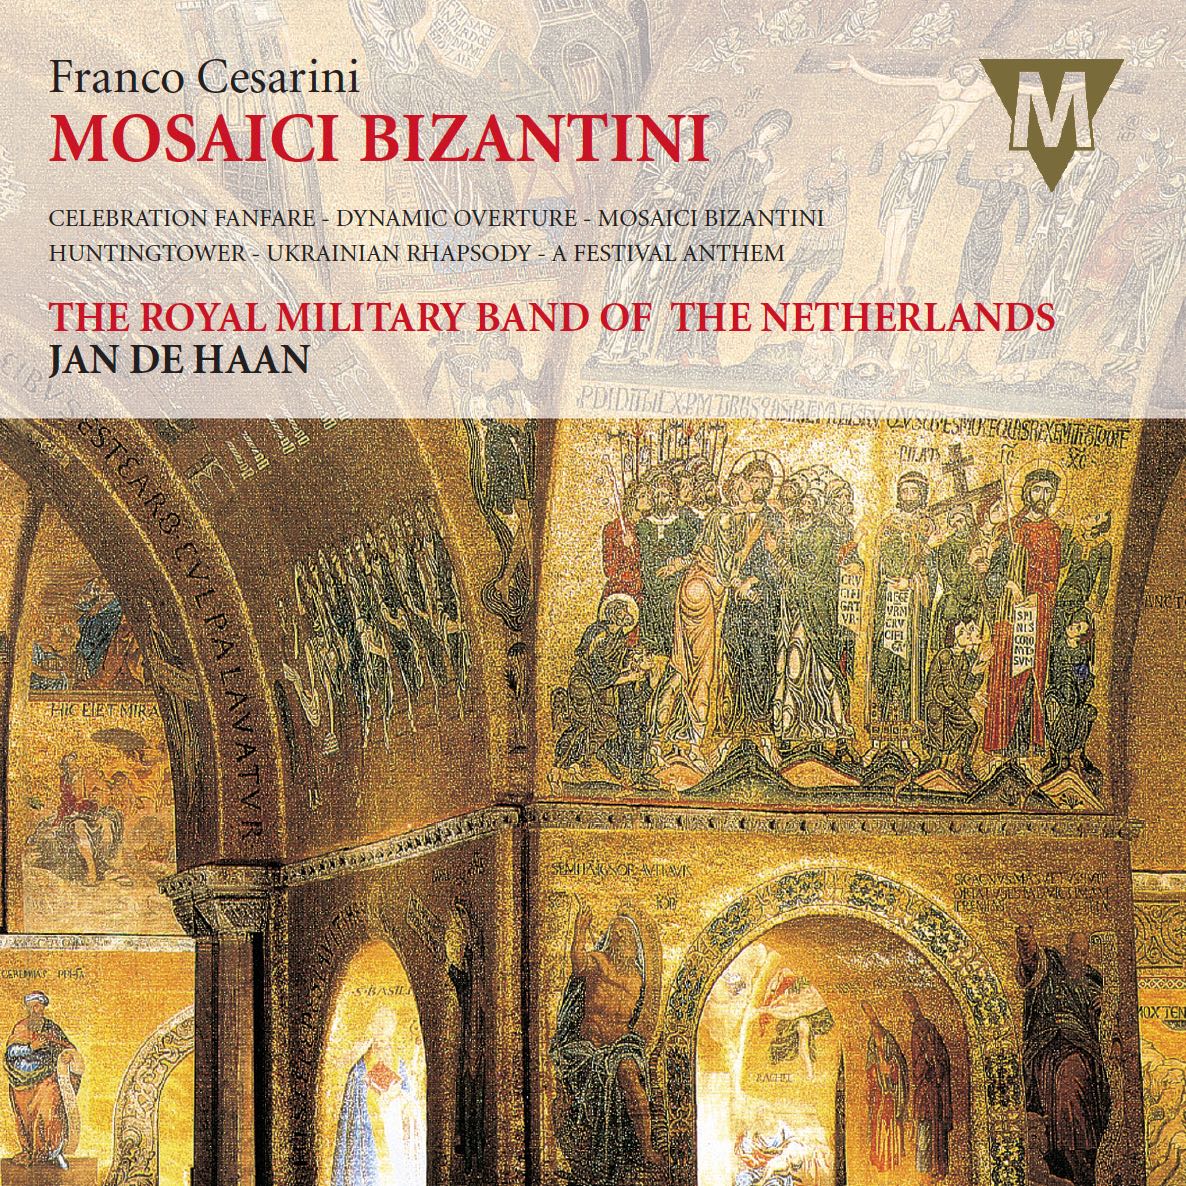 Franco Cesarini – Mosaici Bizantini